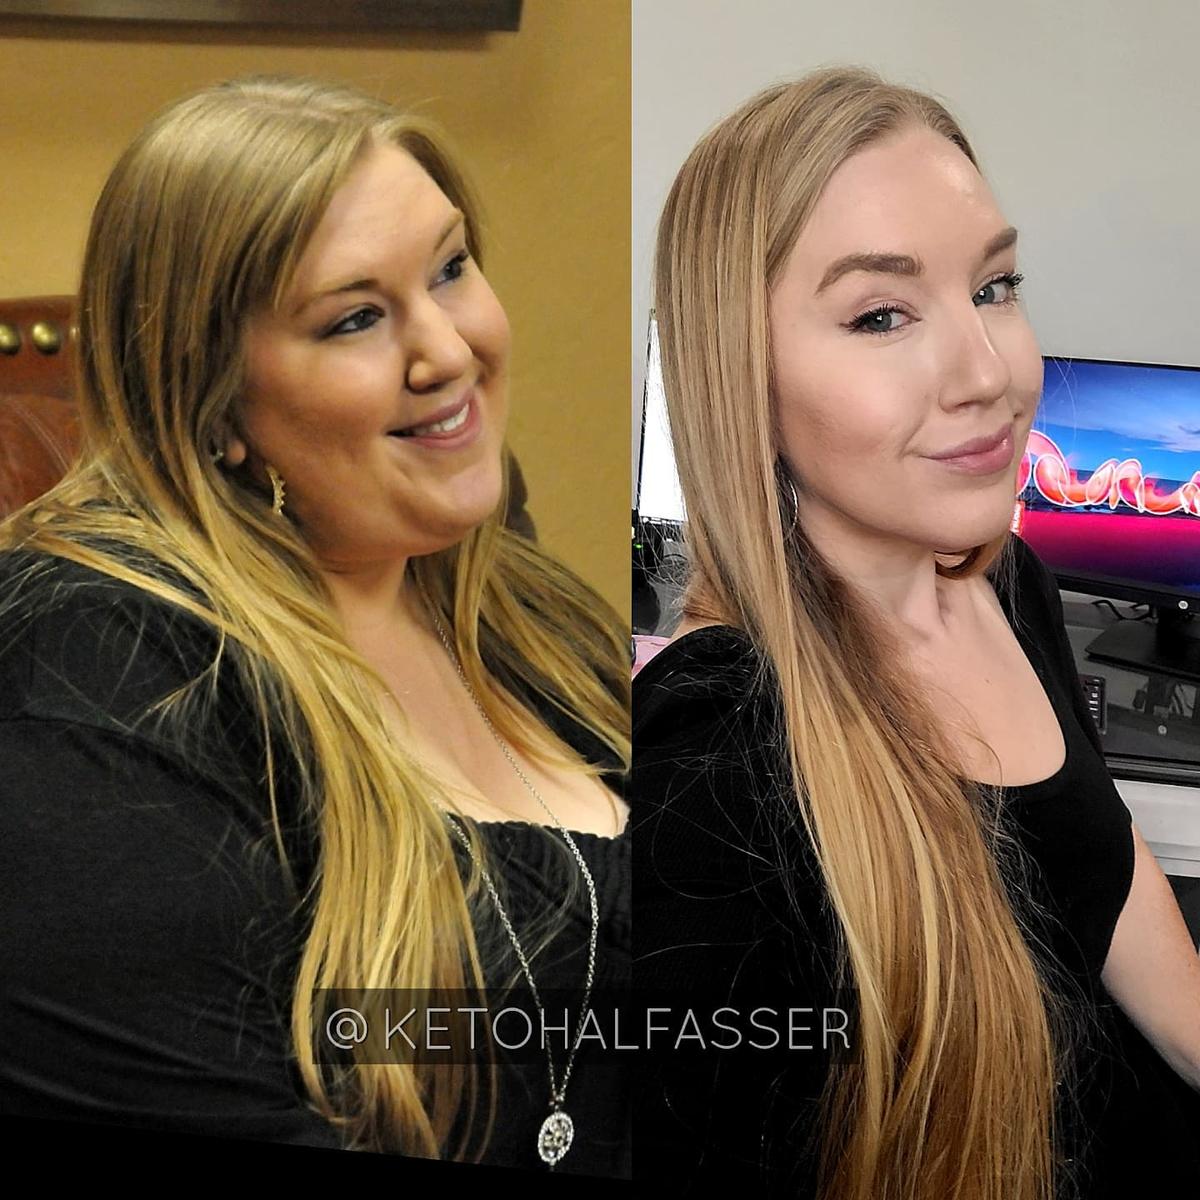 (Left) Ms. Bishop before her weight loss journey began. (Right) Ms. Bishop after her transformation journey began. (Courtesy of <a href="https://www.instagram.com/ketohalfasser/">Chelsey Bishop</a>)